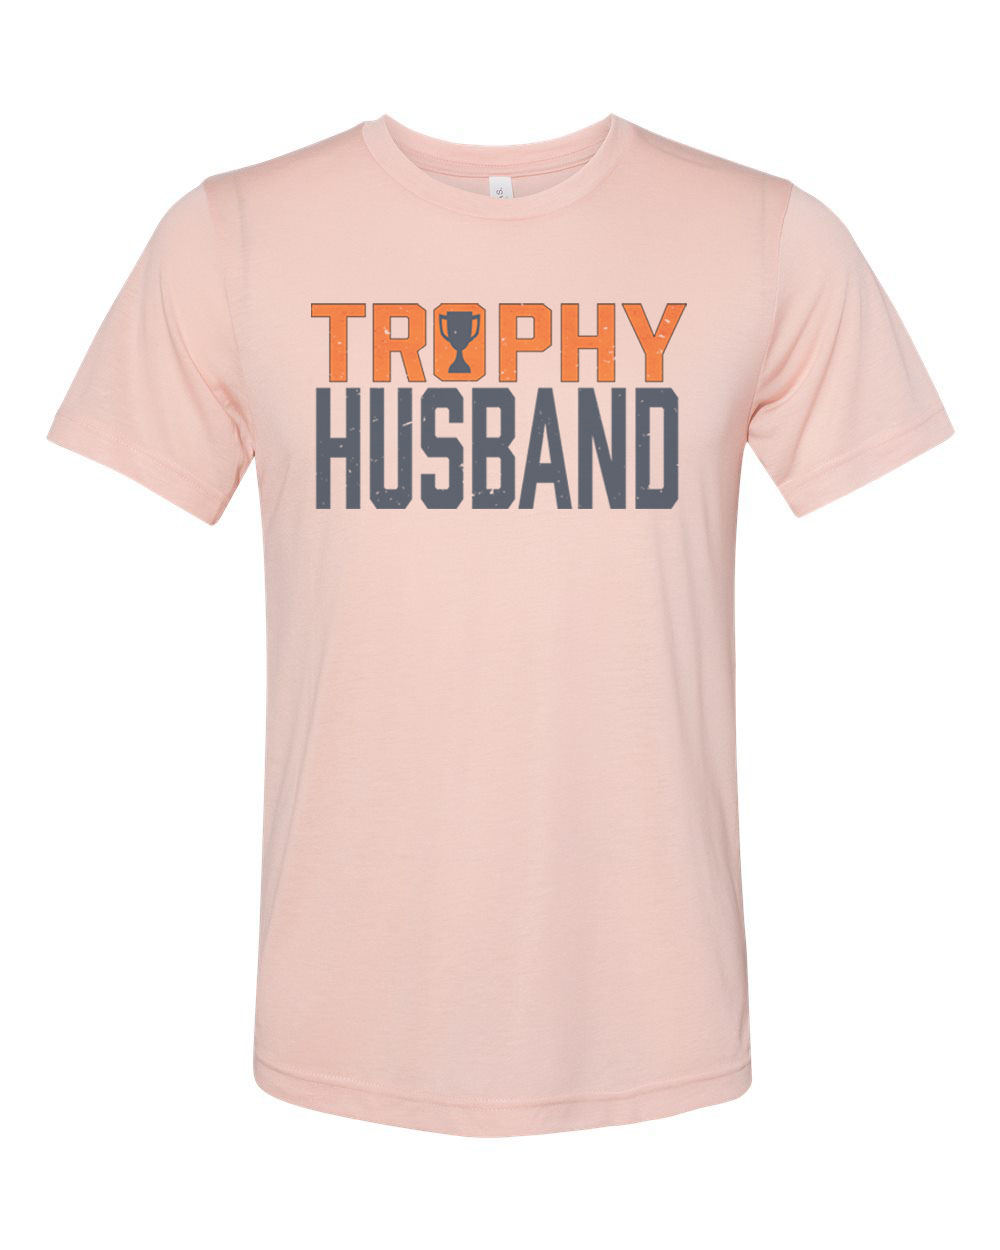 Trophy Husband Shirt, Gift For Him, Hubby Shirt, Trophy Husband, Father's Day Gift, Gift For Husband, Funny Husband Shirt, Husband Gift, Peach, 2XL - image 1 of 1